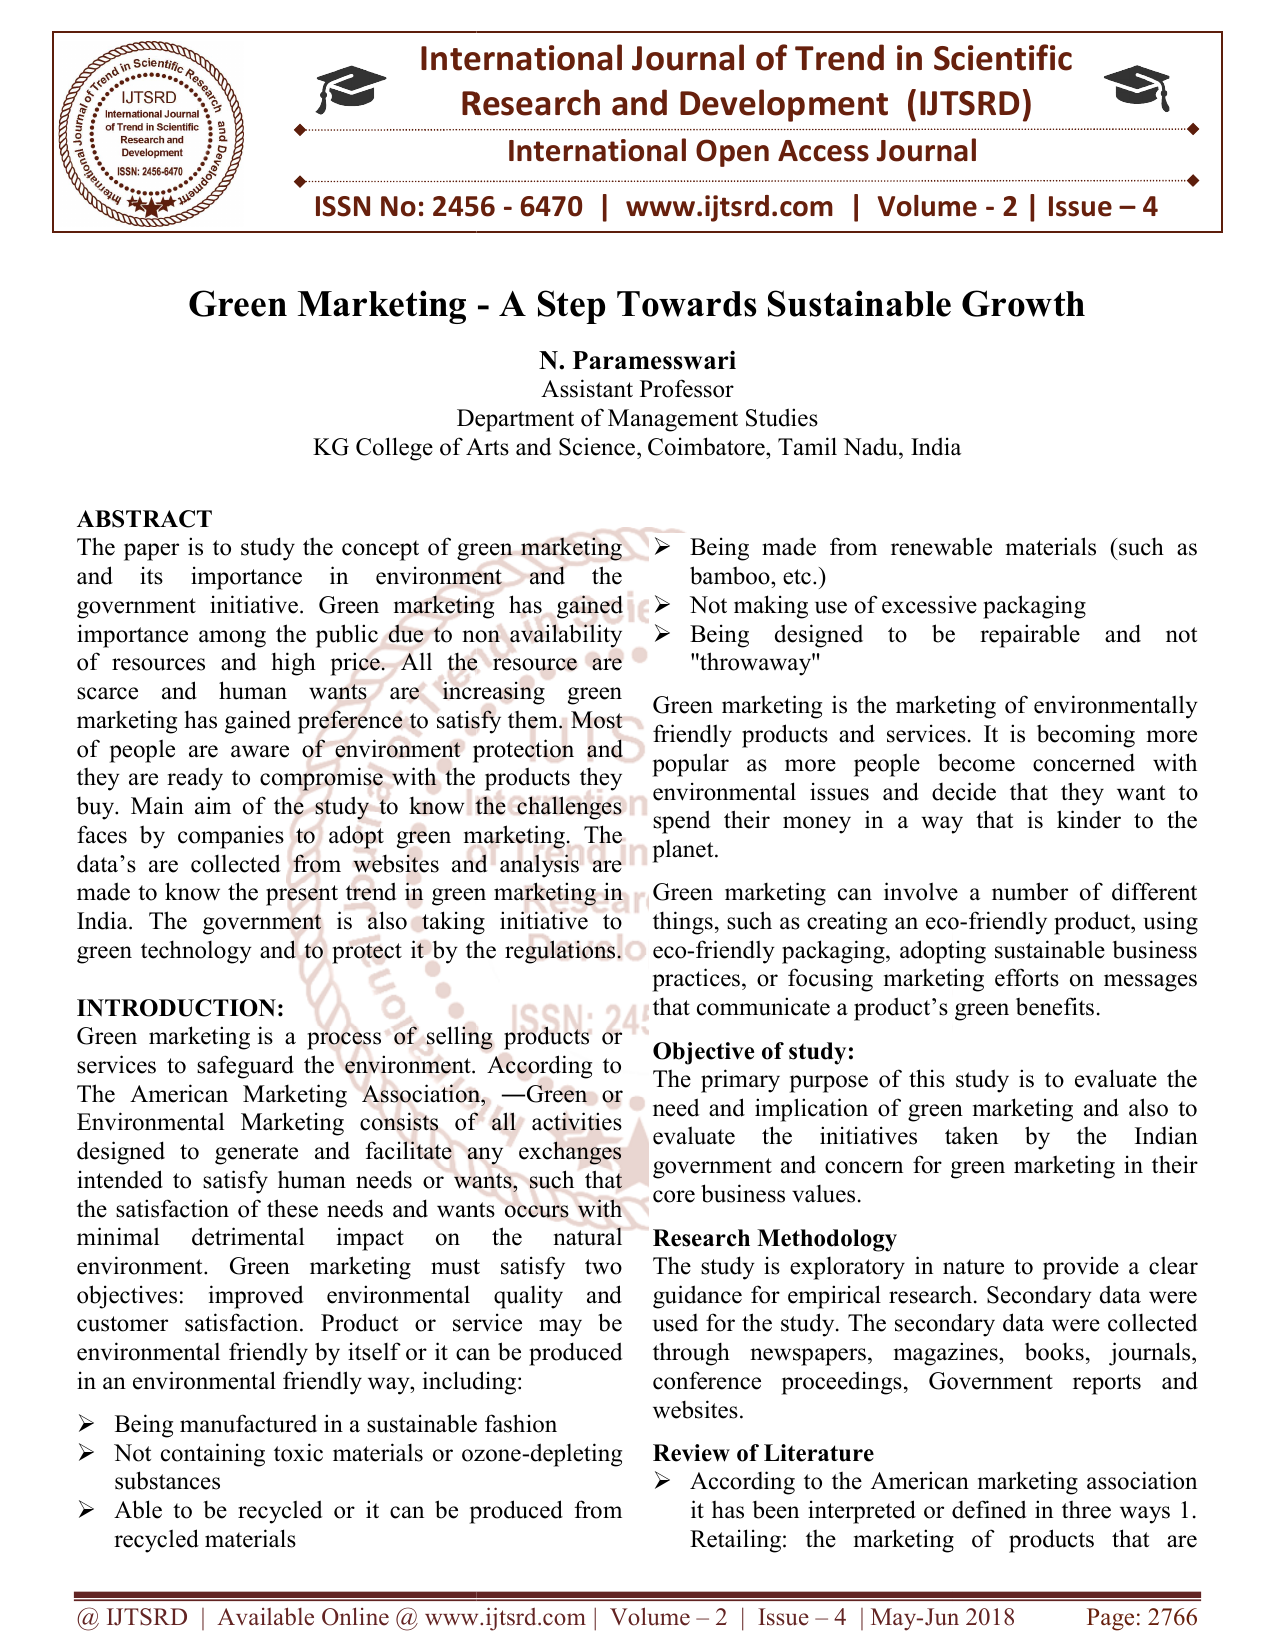 dissertation topics on green marketing